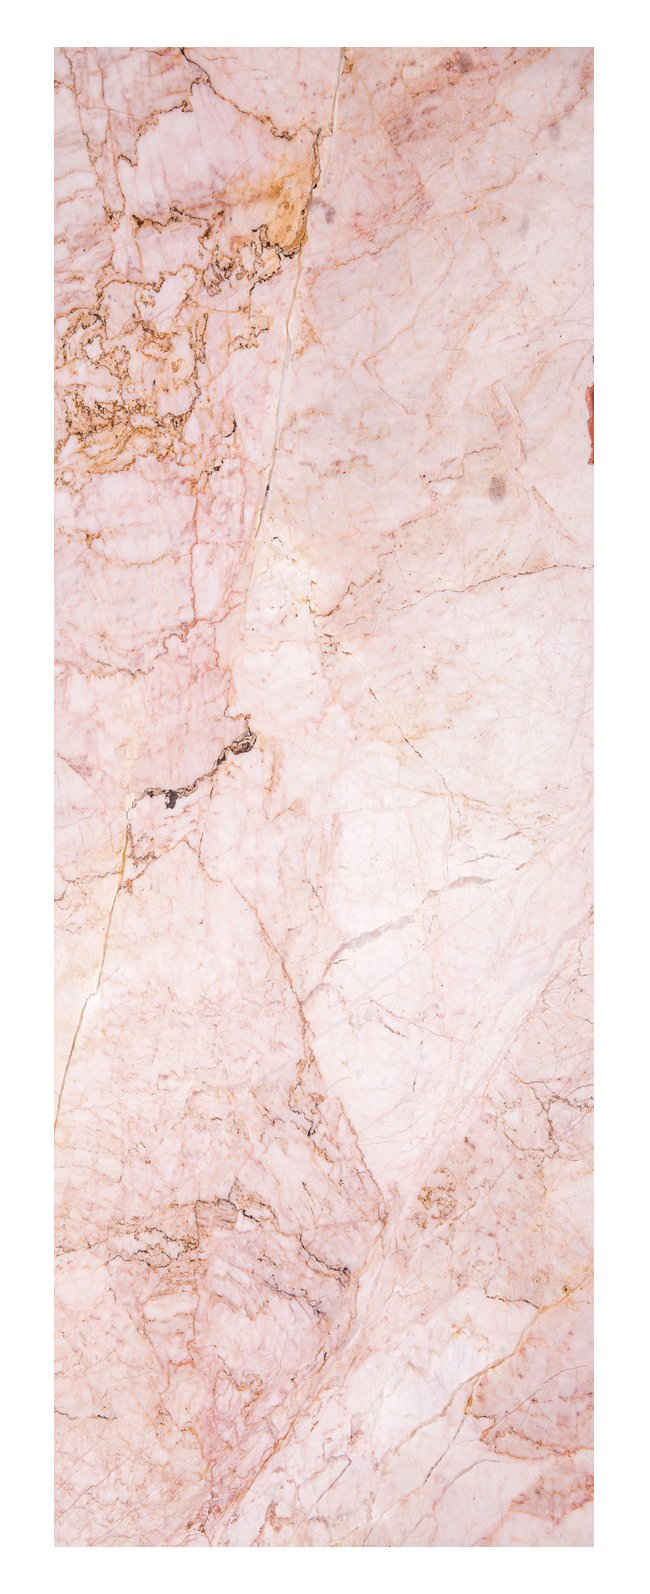 queence Vinyltapete »Marmor-Rosa«, Steinoptik, 90 x 250 cm, selbstklebend